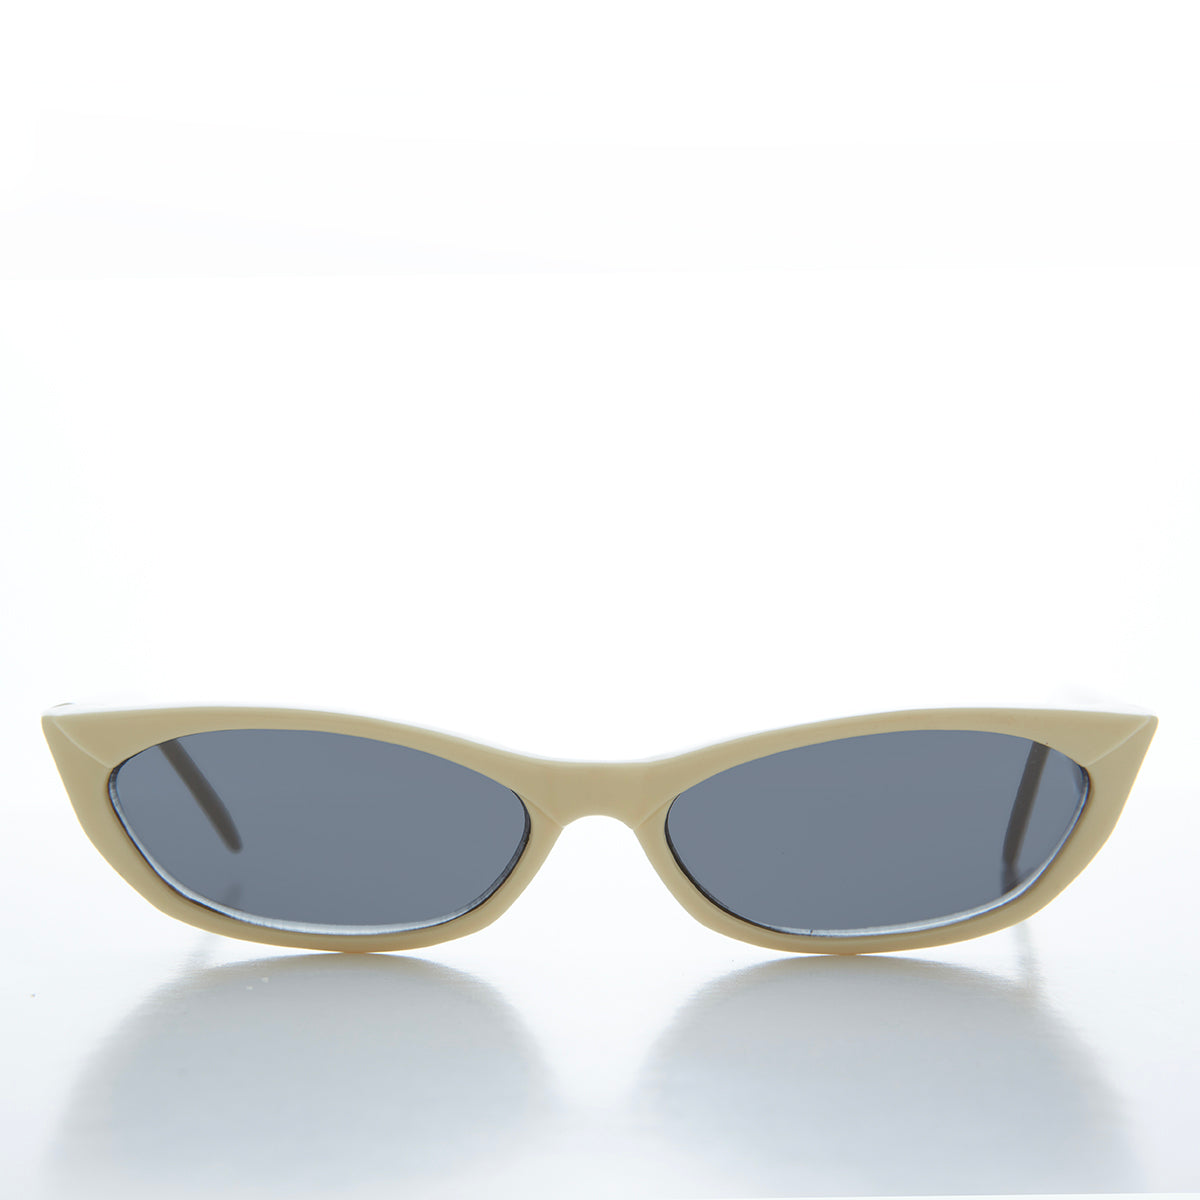 90s Edgy Slim Vintage Sunglasses - Anton